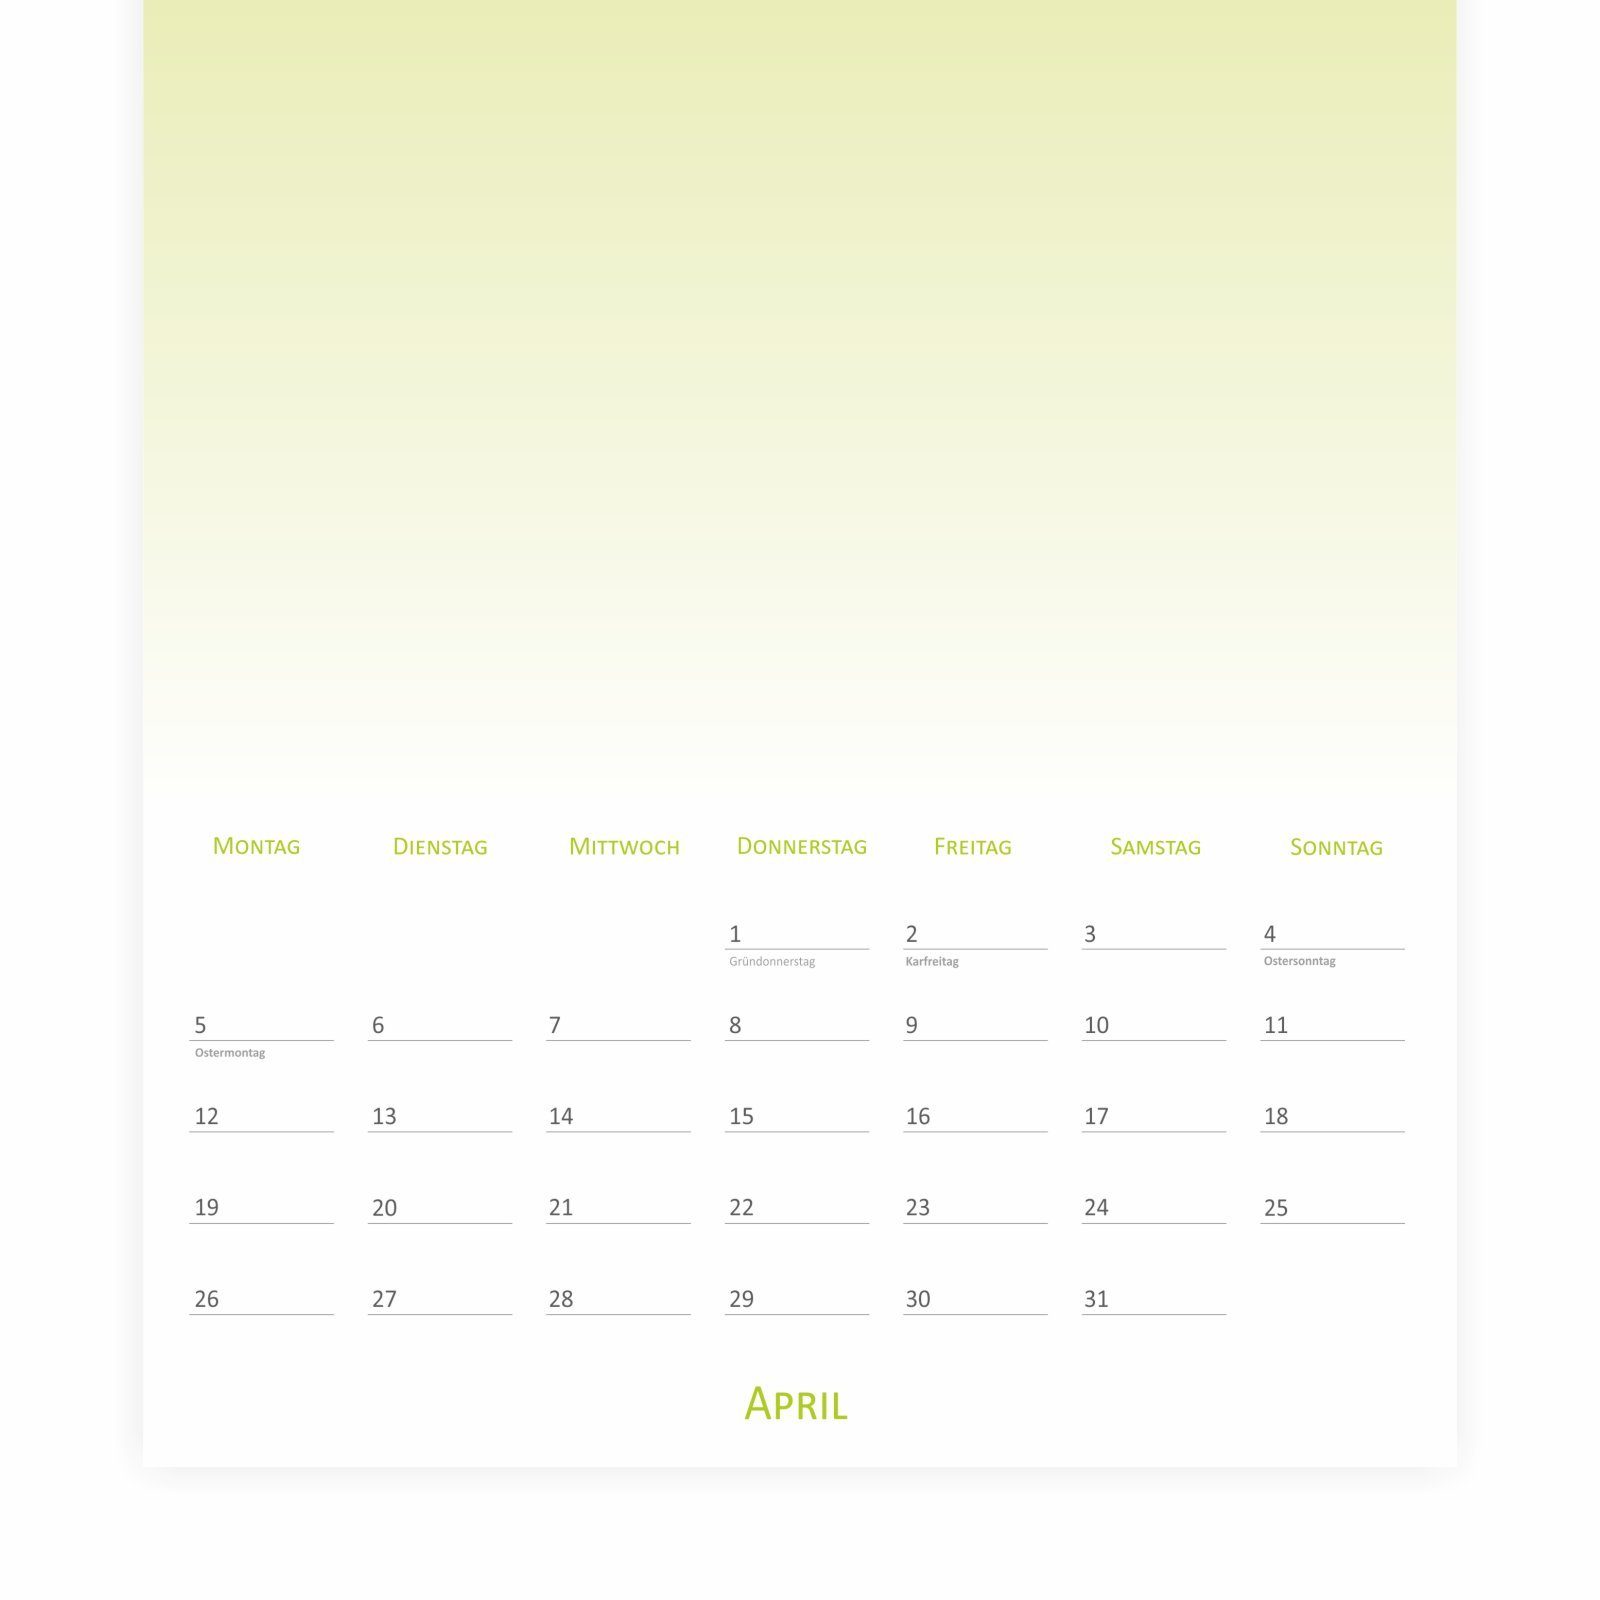 nikima Packpapier Bastelkalender Verlauf 2024, Fotokalender